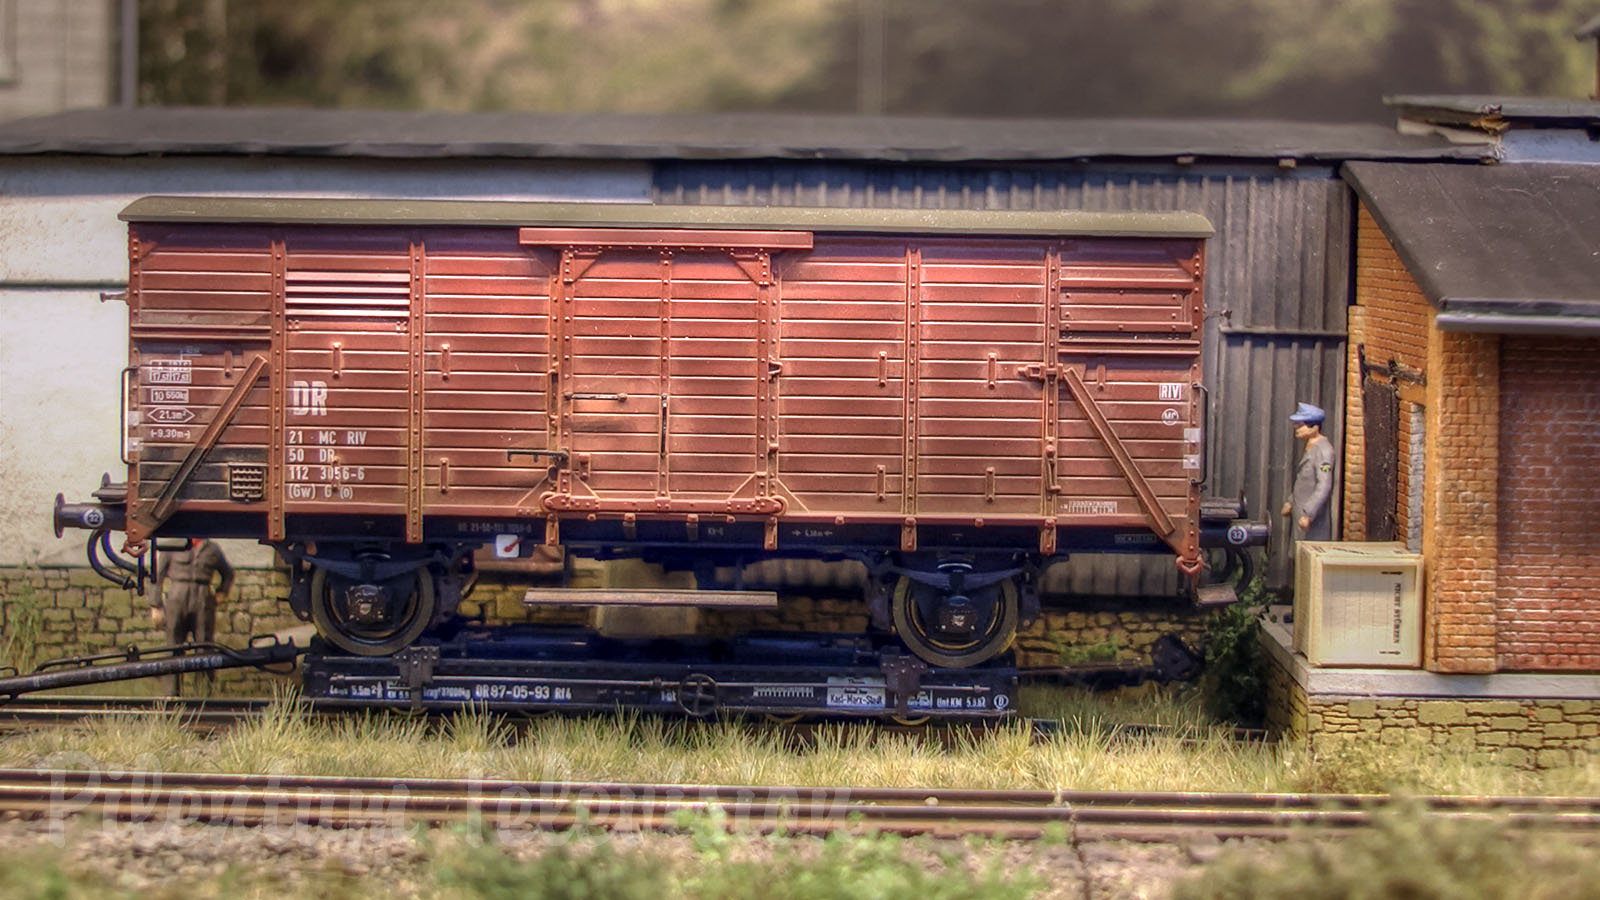 Beautiful Model Steam Train Layout of the Saxon Narrow Gauge Railways with Transporter Wagon